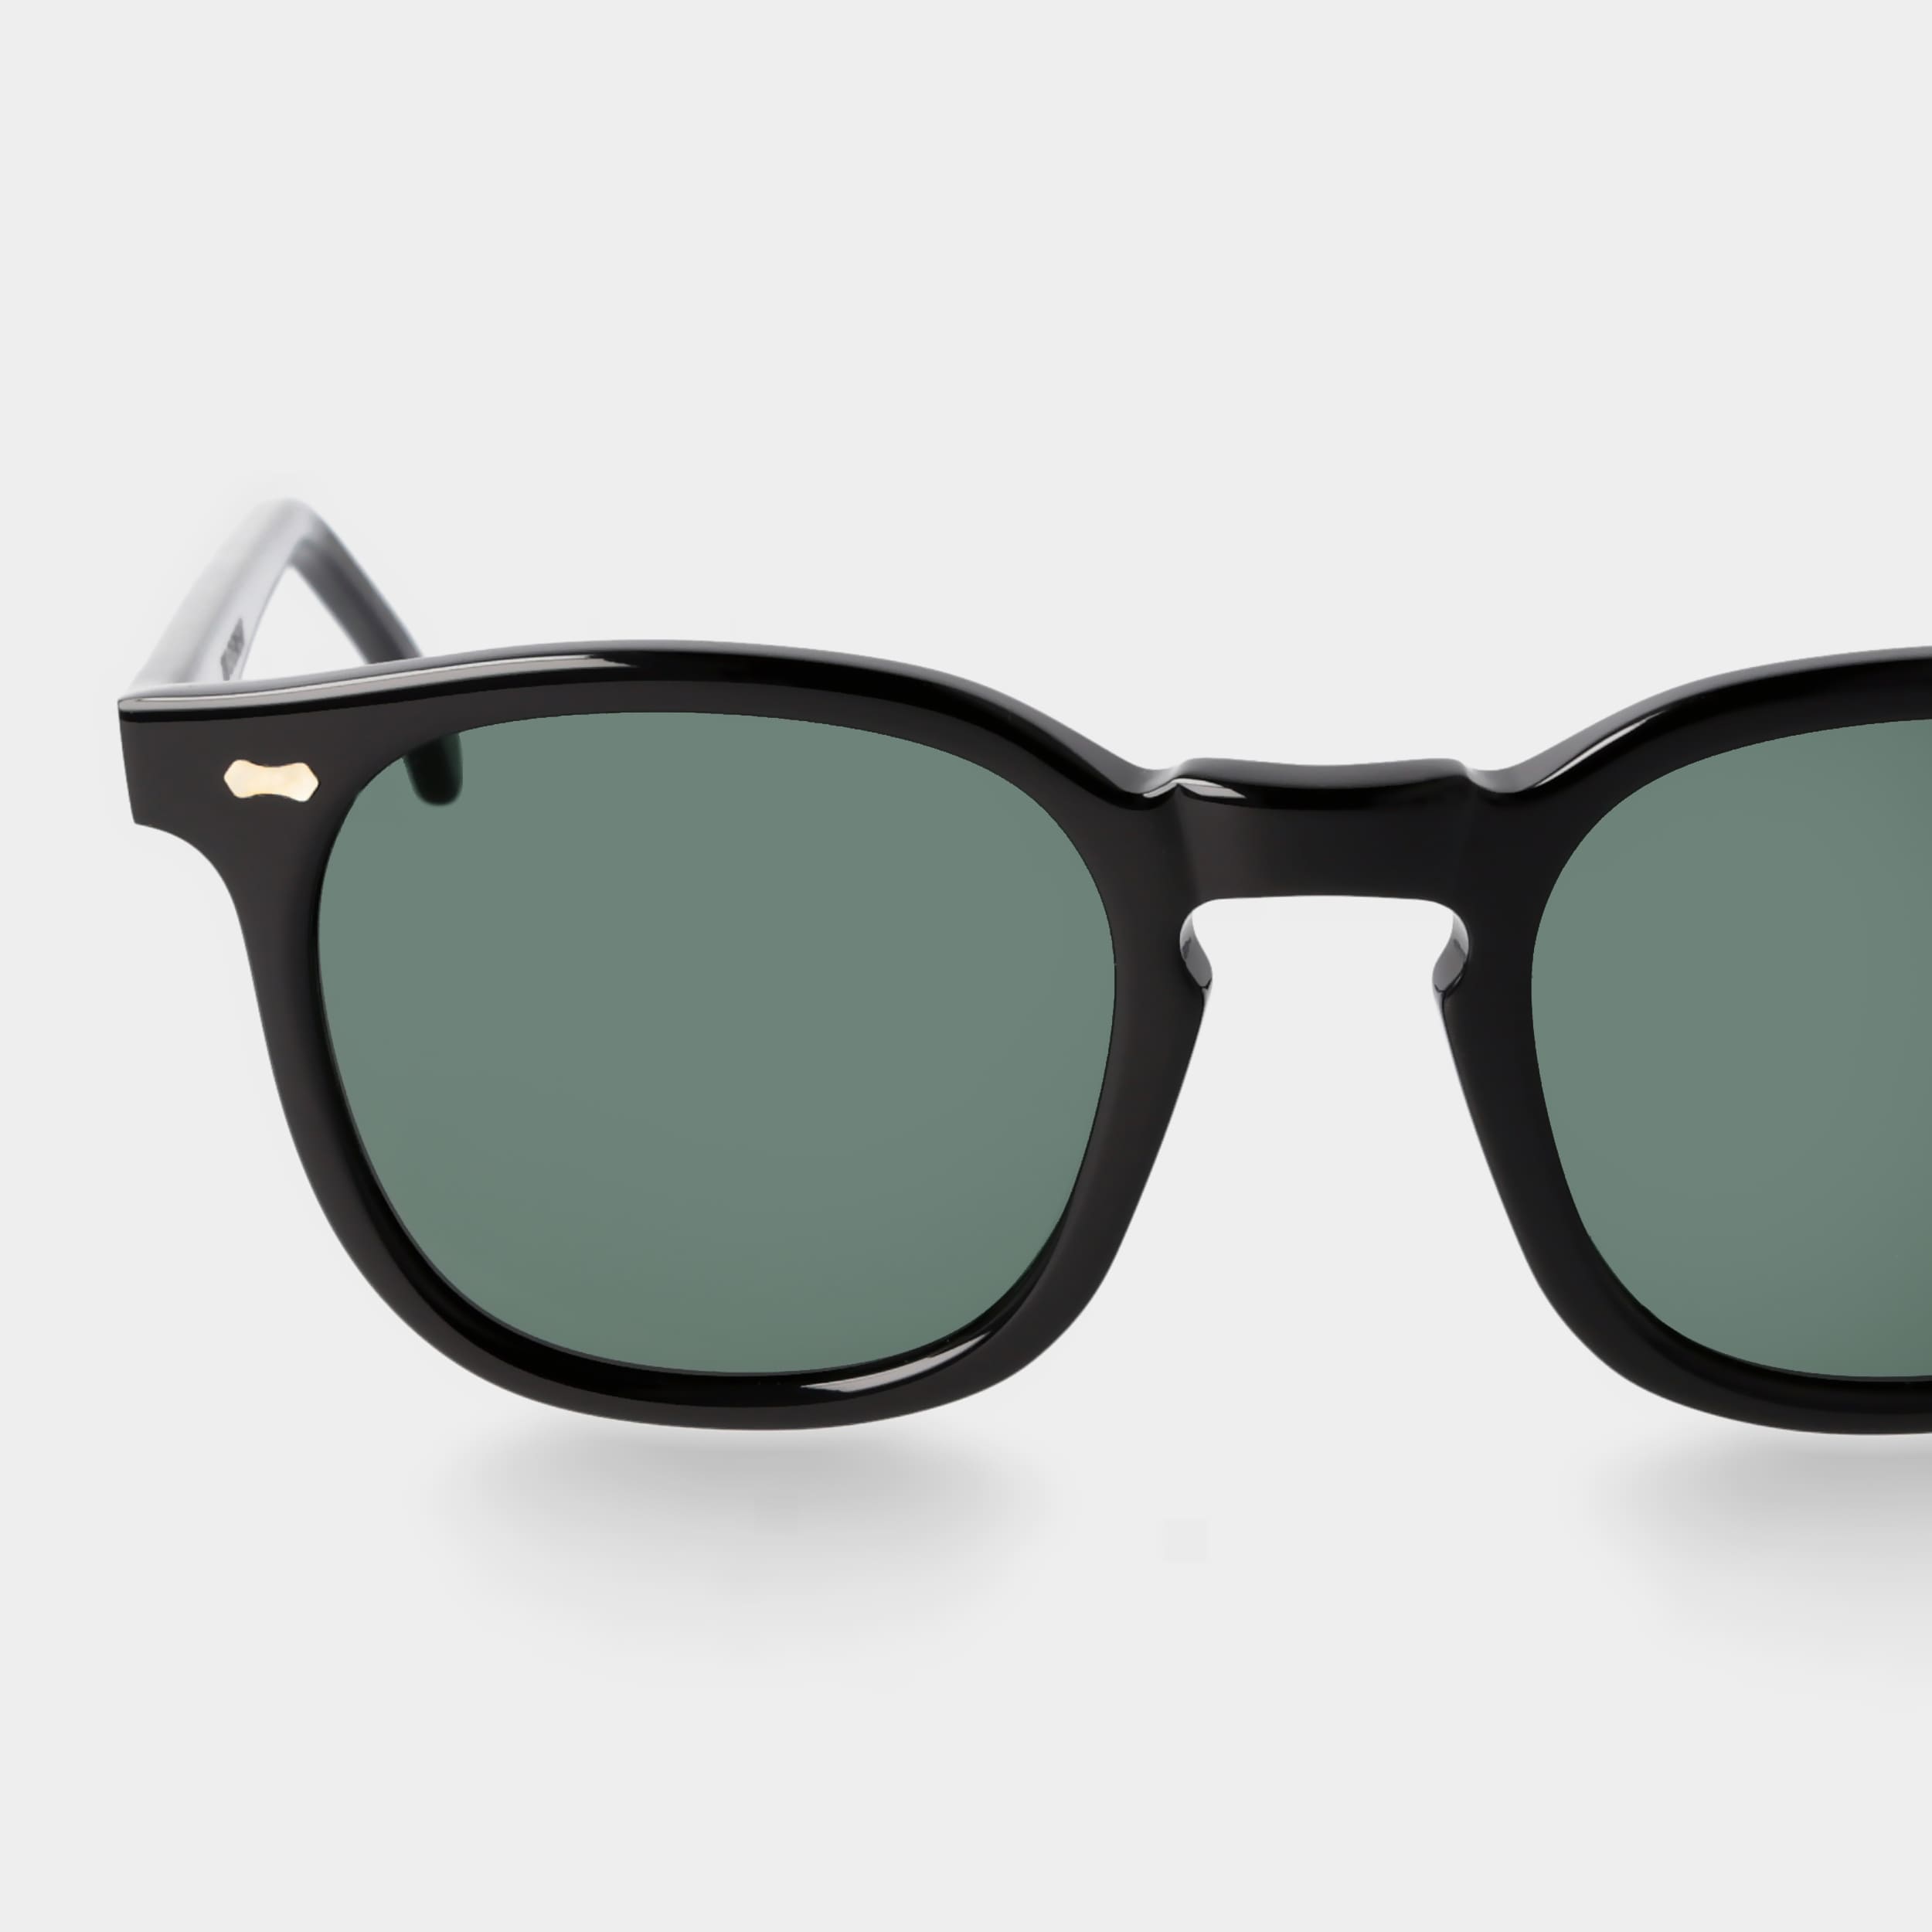 sunglasses-twill-eco-black-bottle-green-sustainable-tbd-eyewear-lens